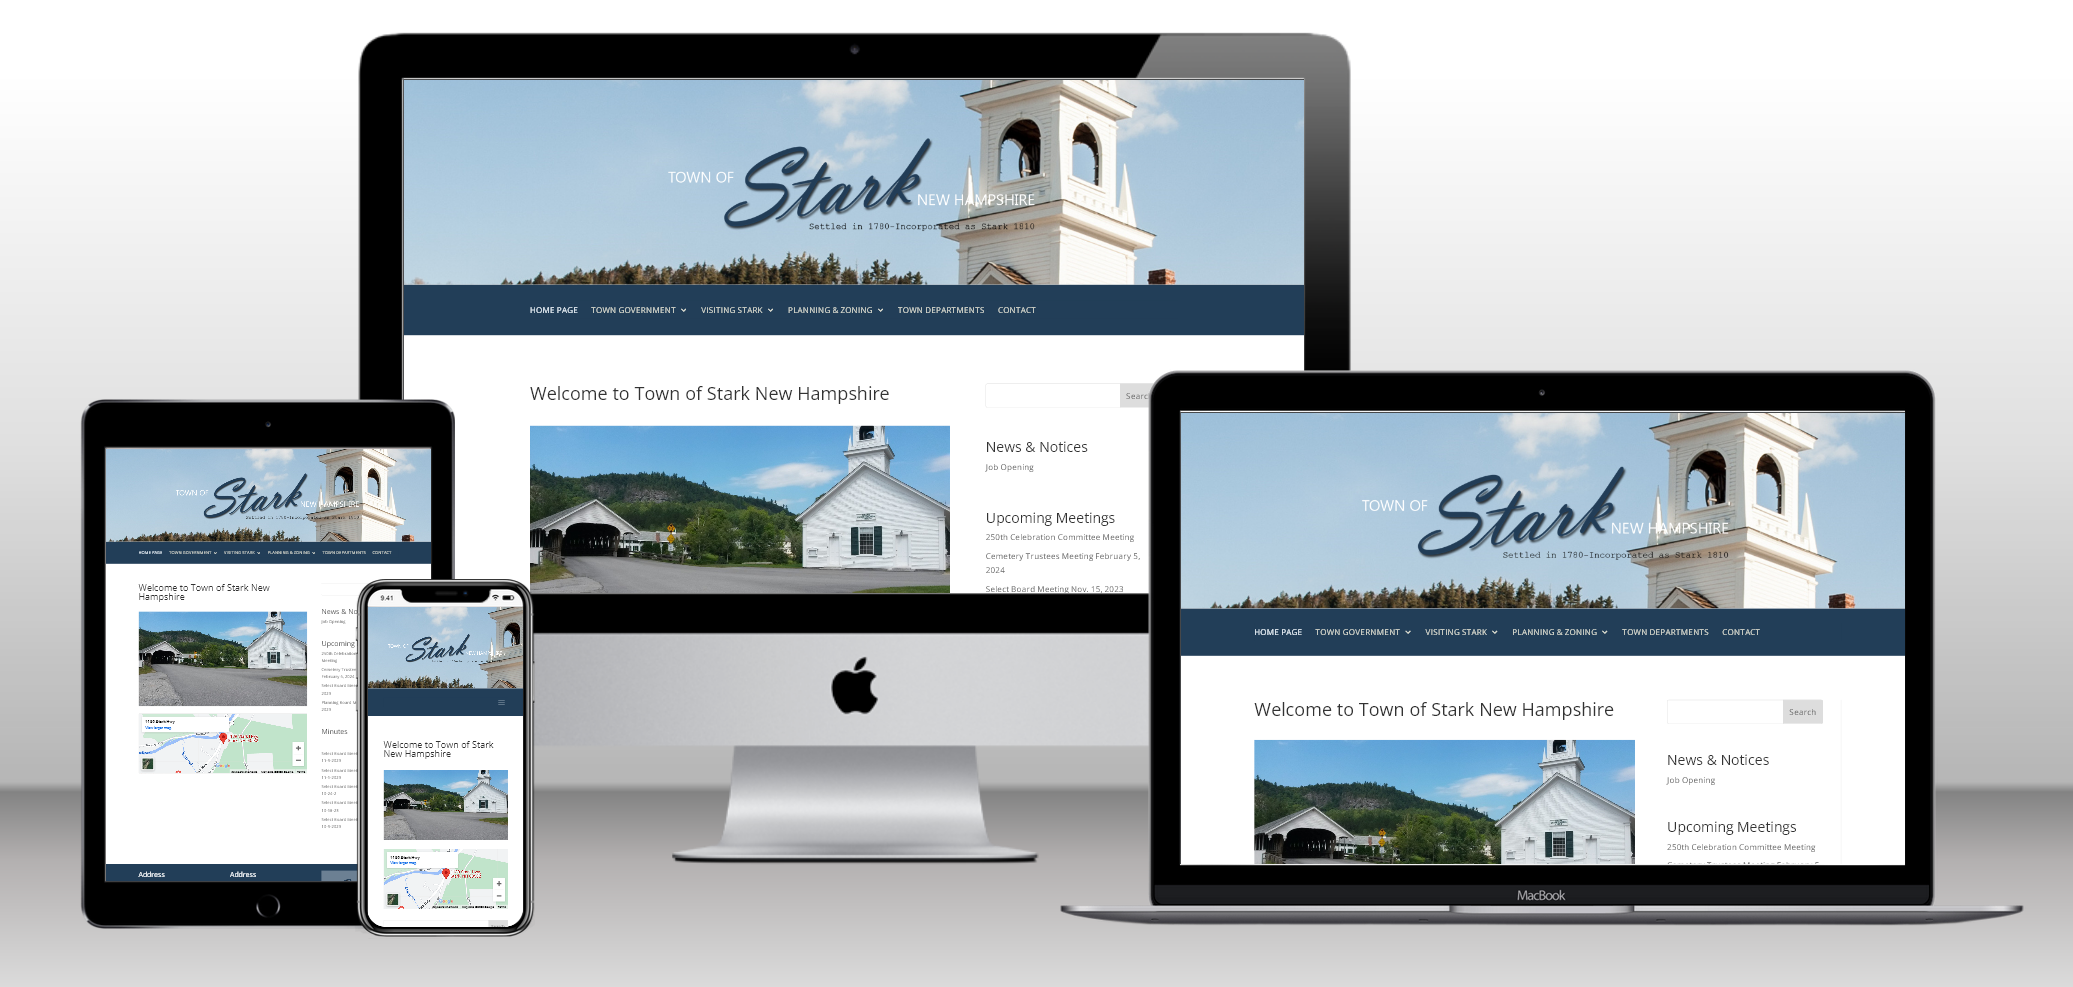 Town of Startk web design by Sunnvalley LLC.